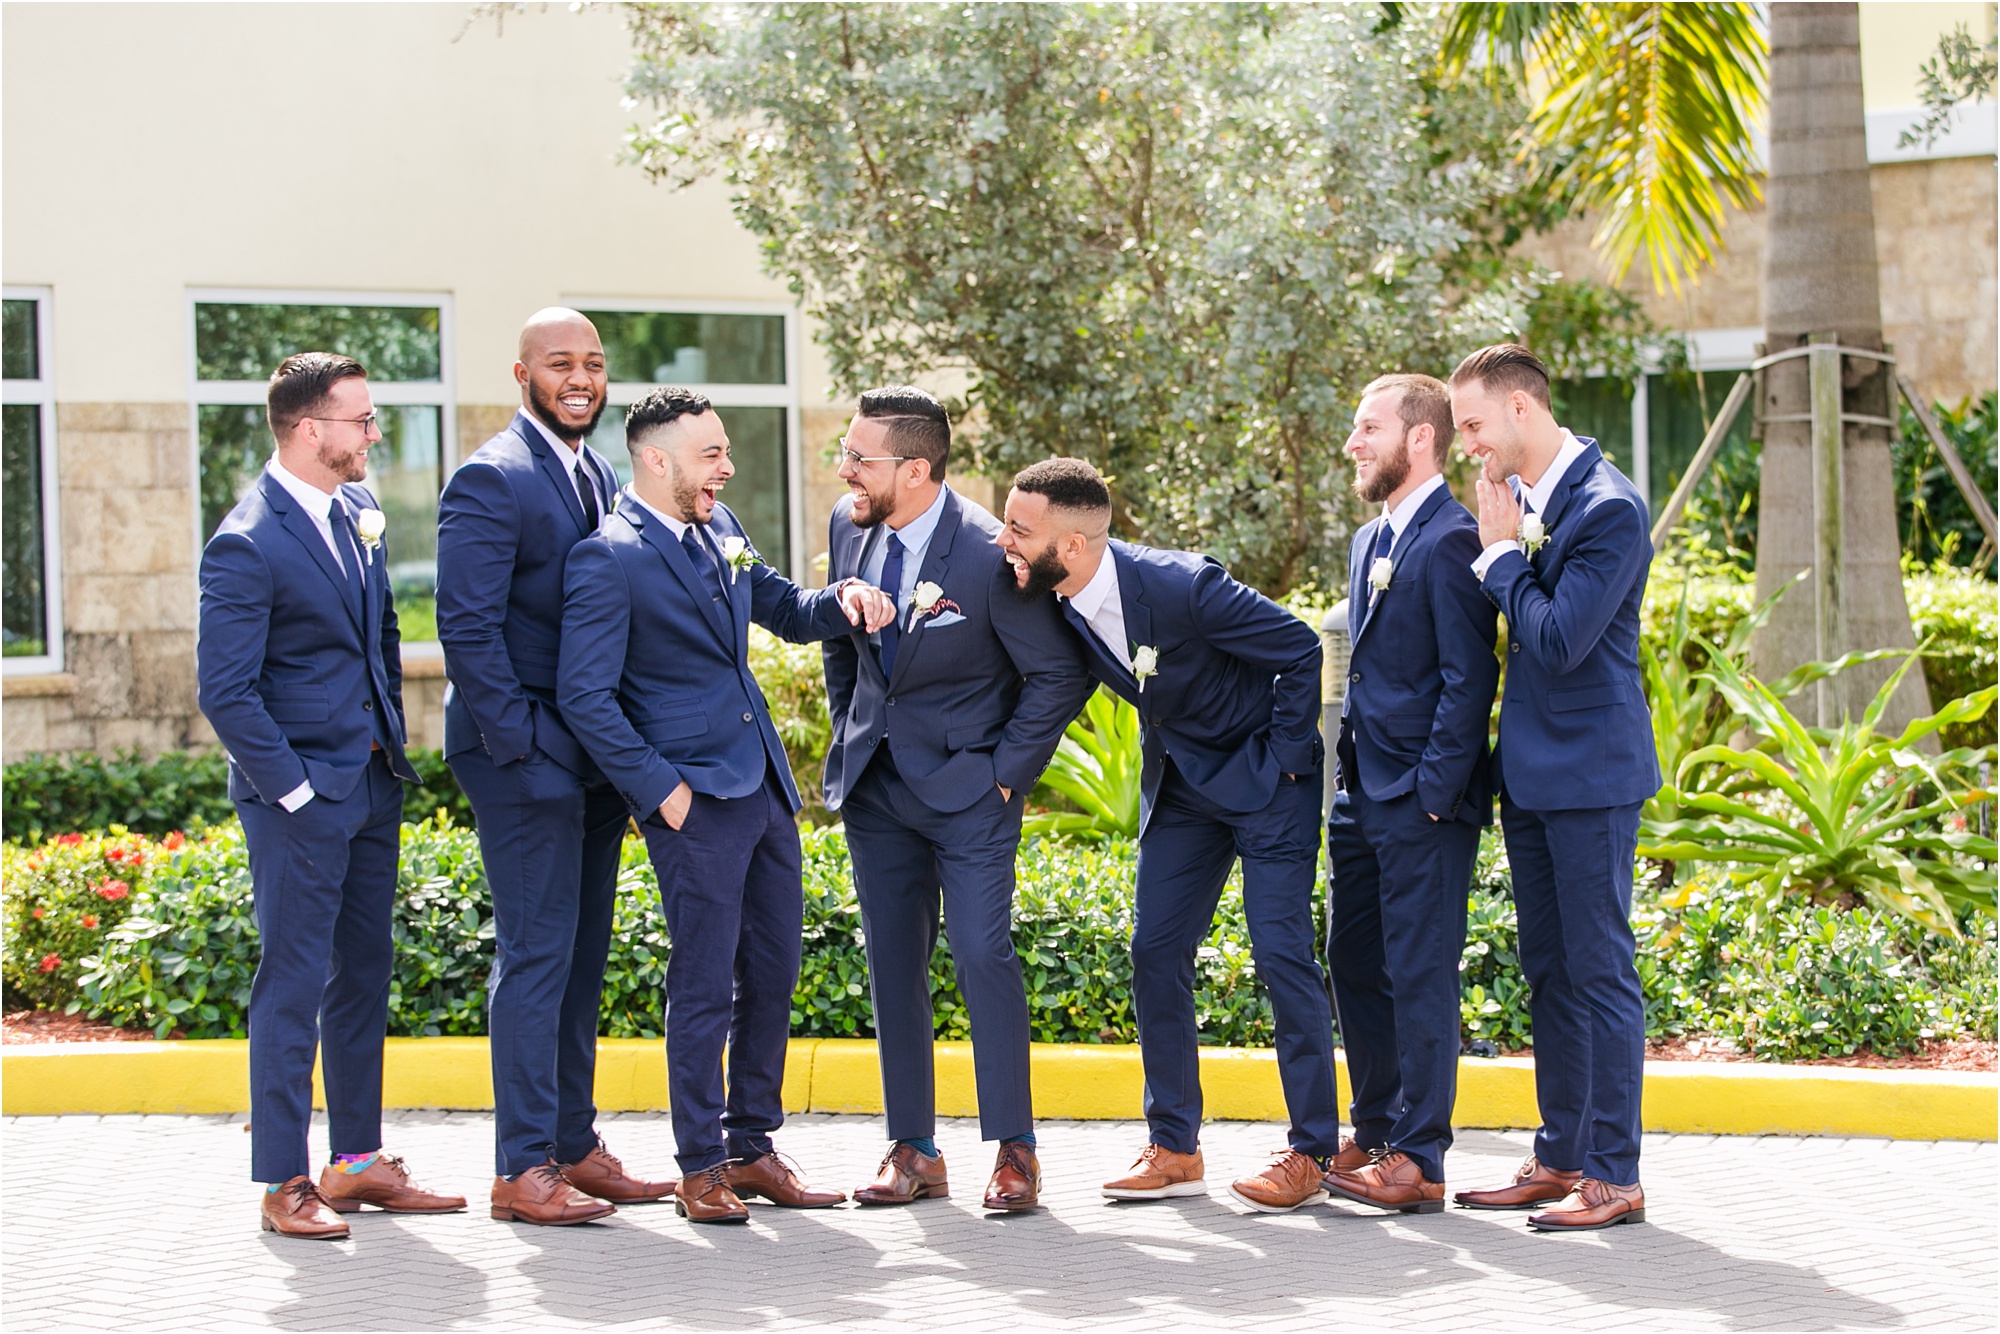 stephanie gore photo macon georgia south florida wedding photographer groomsmen laughing